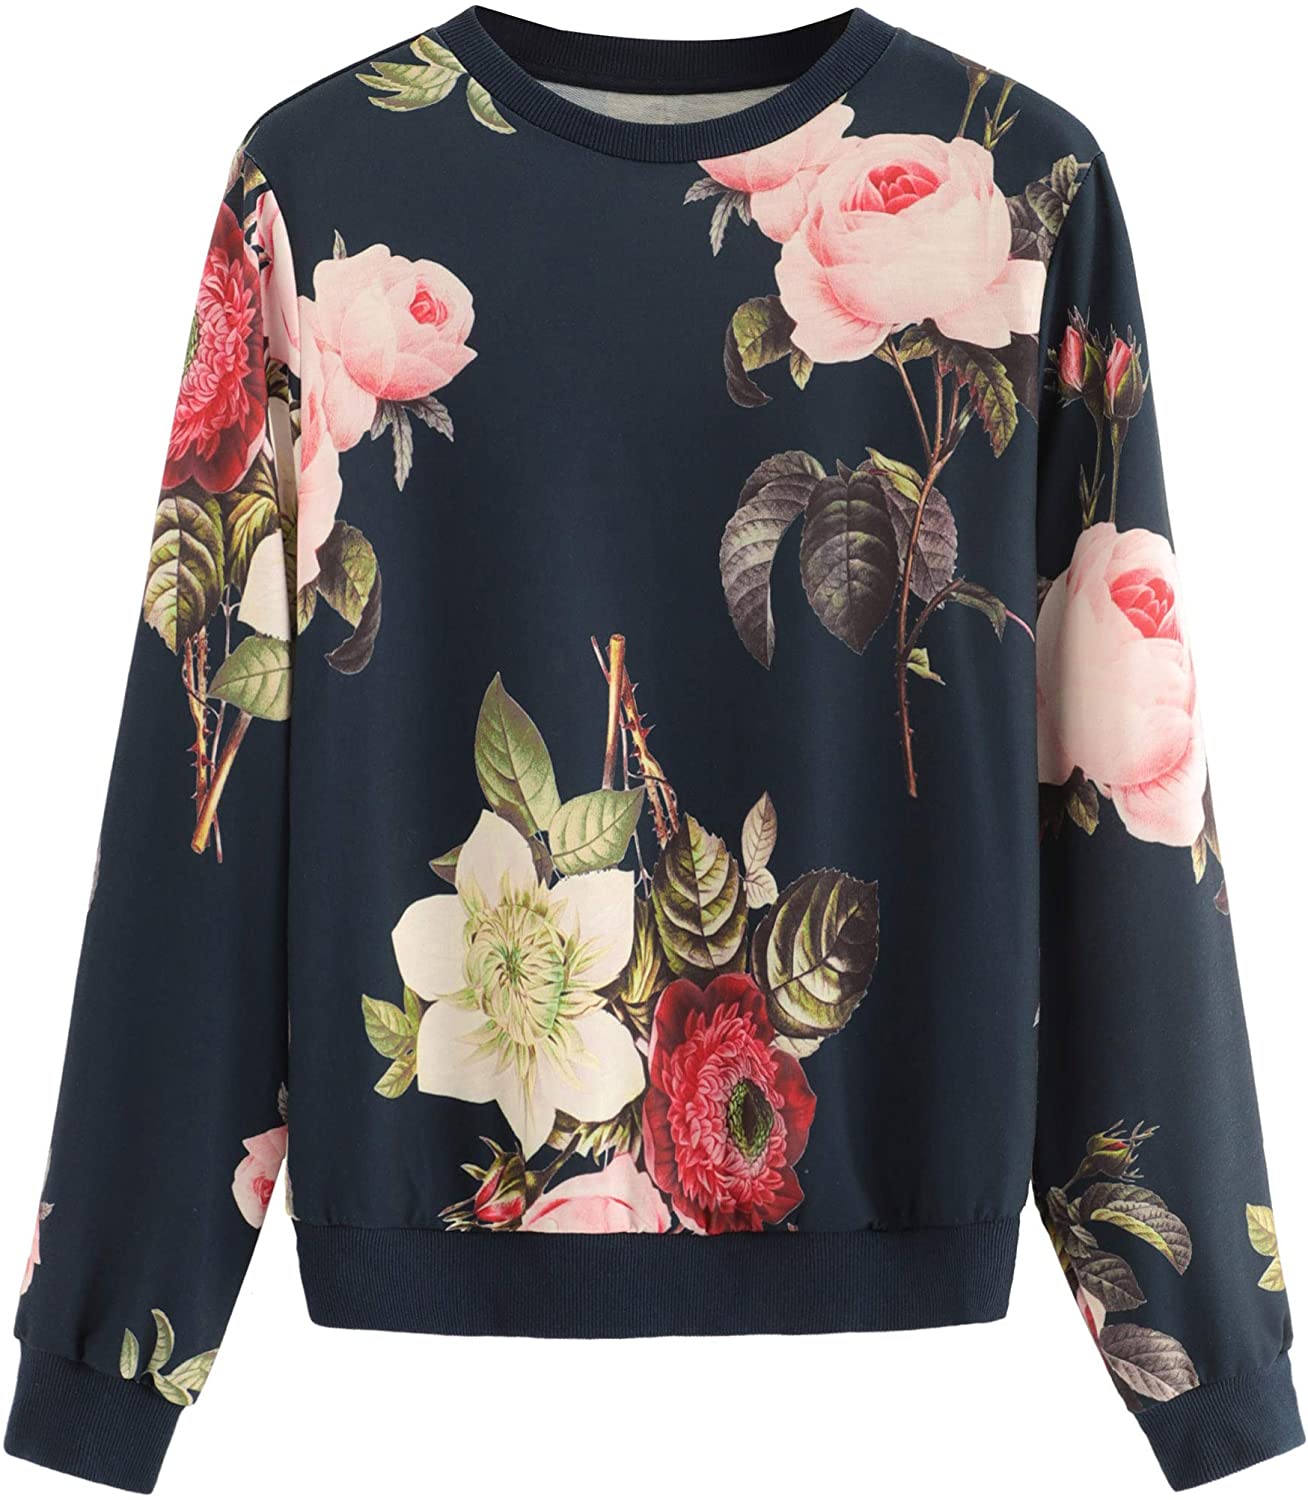 ROMWE Womens Casual Floral Print Long Sleeve Pullover Tops Lightweight Sweatshirt 